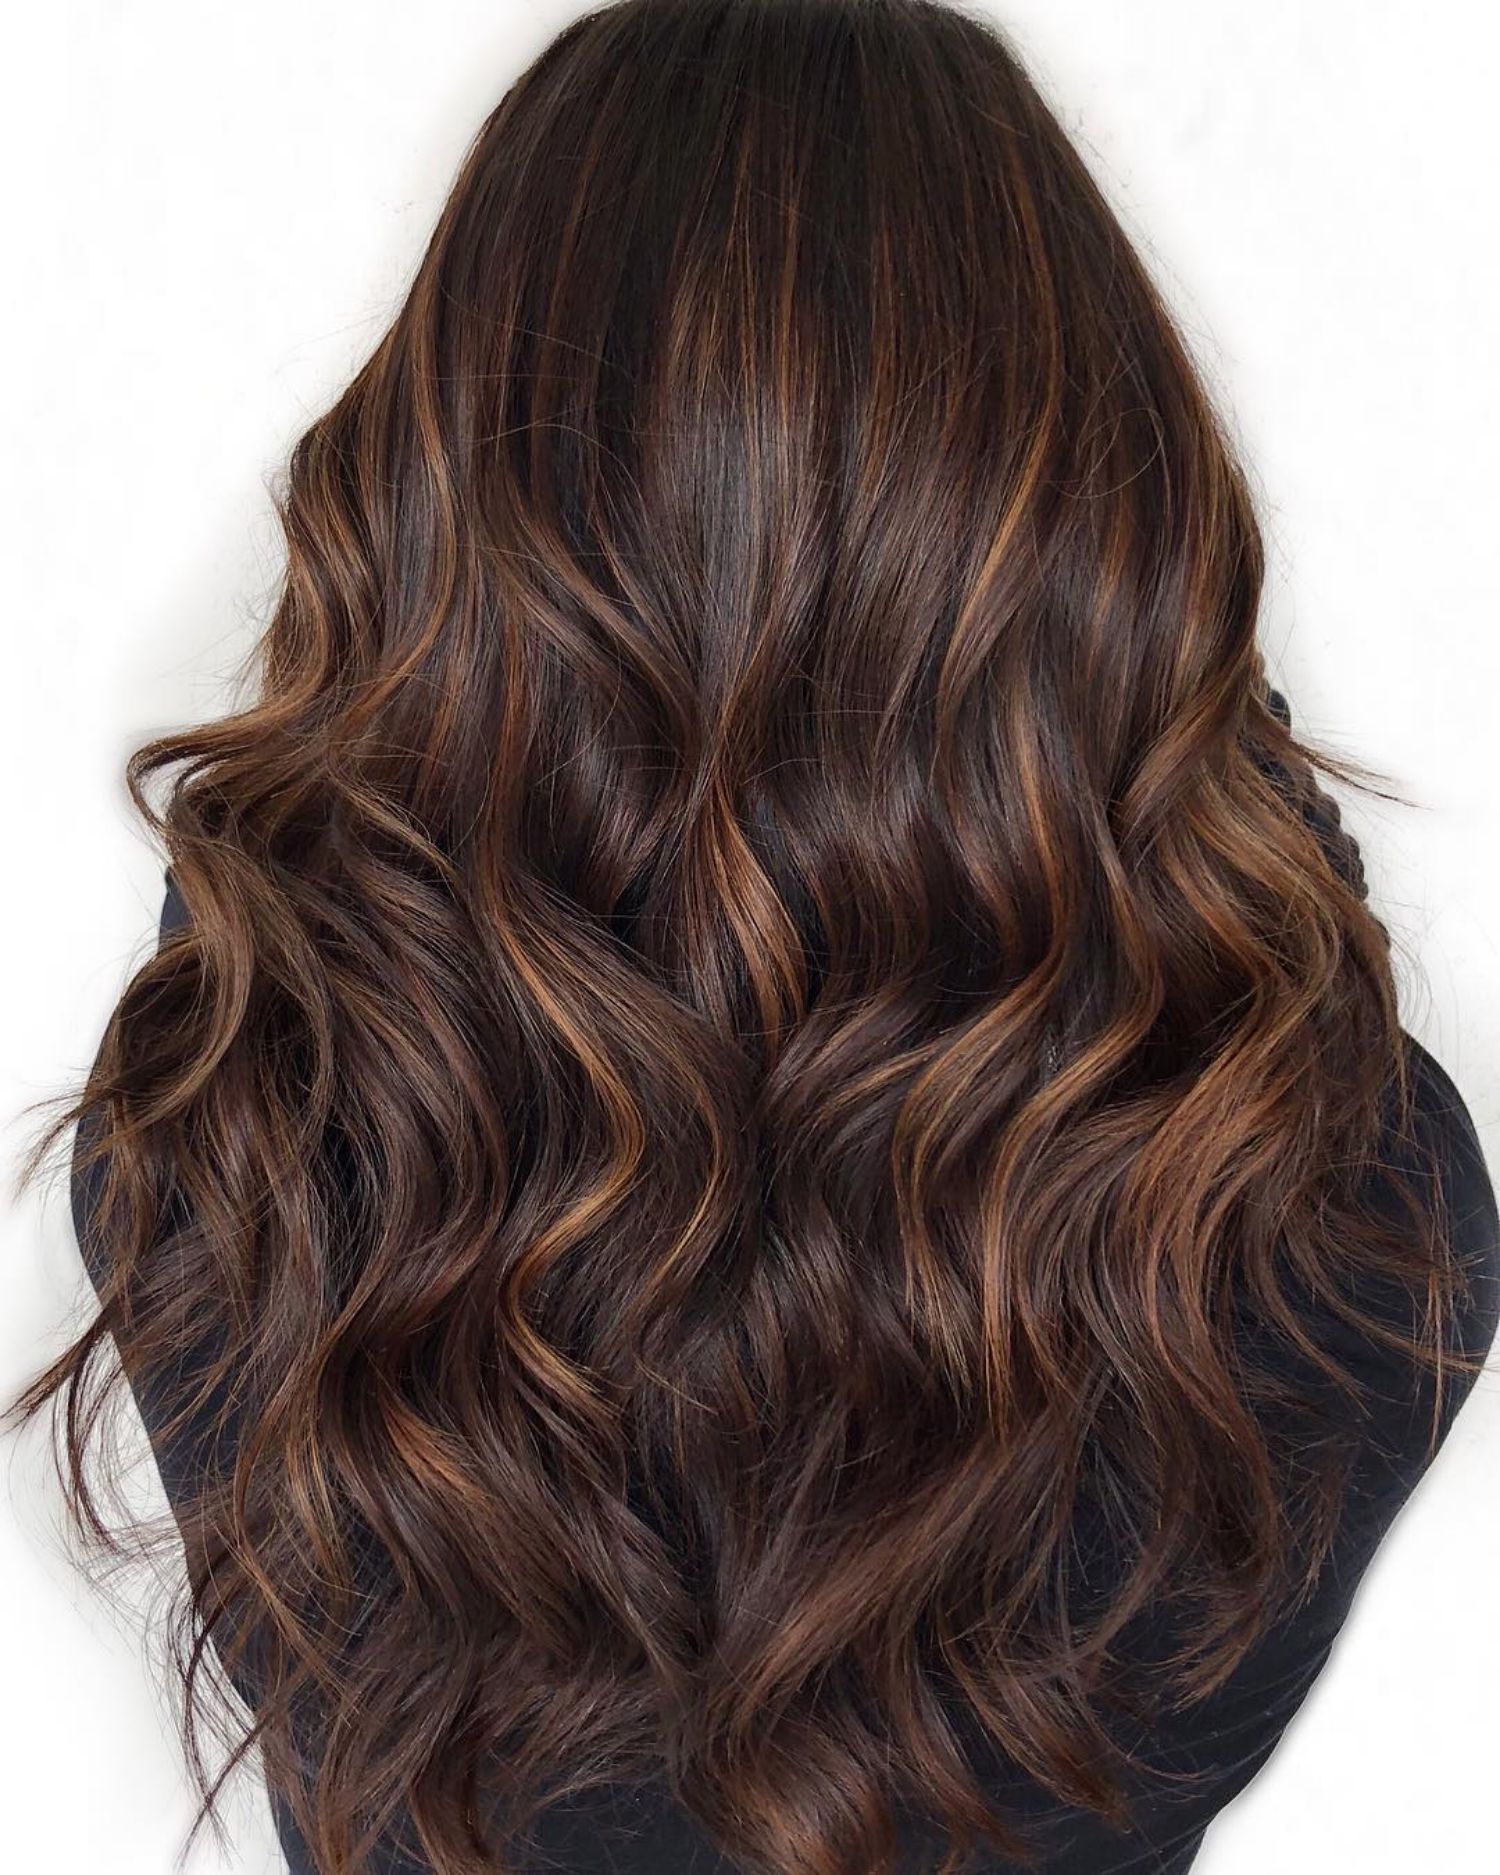 60 Looks with Caramel Highlights on Brown and Dark Brown Hair -   7 hair Brown braids ideas